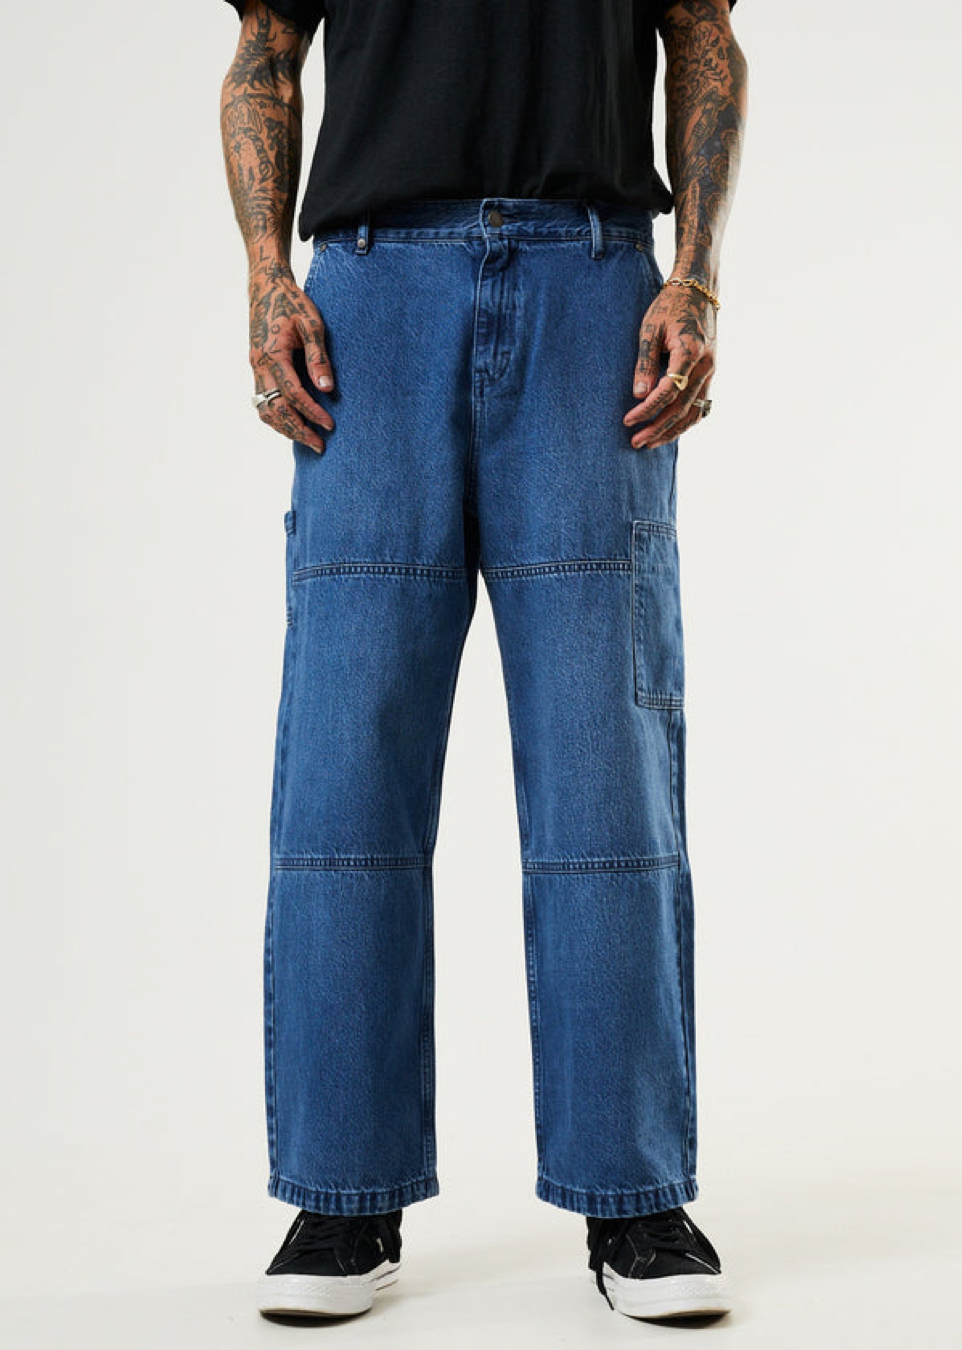 Richmond - Hemp Denim Baggy Workwear Jeans / Authentic Blue